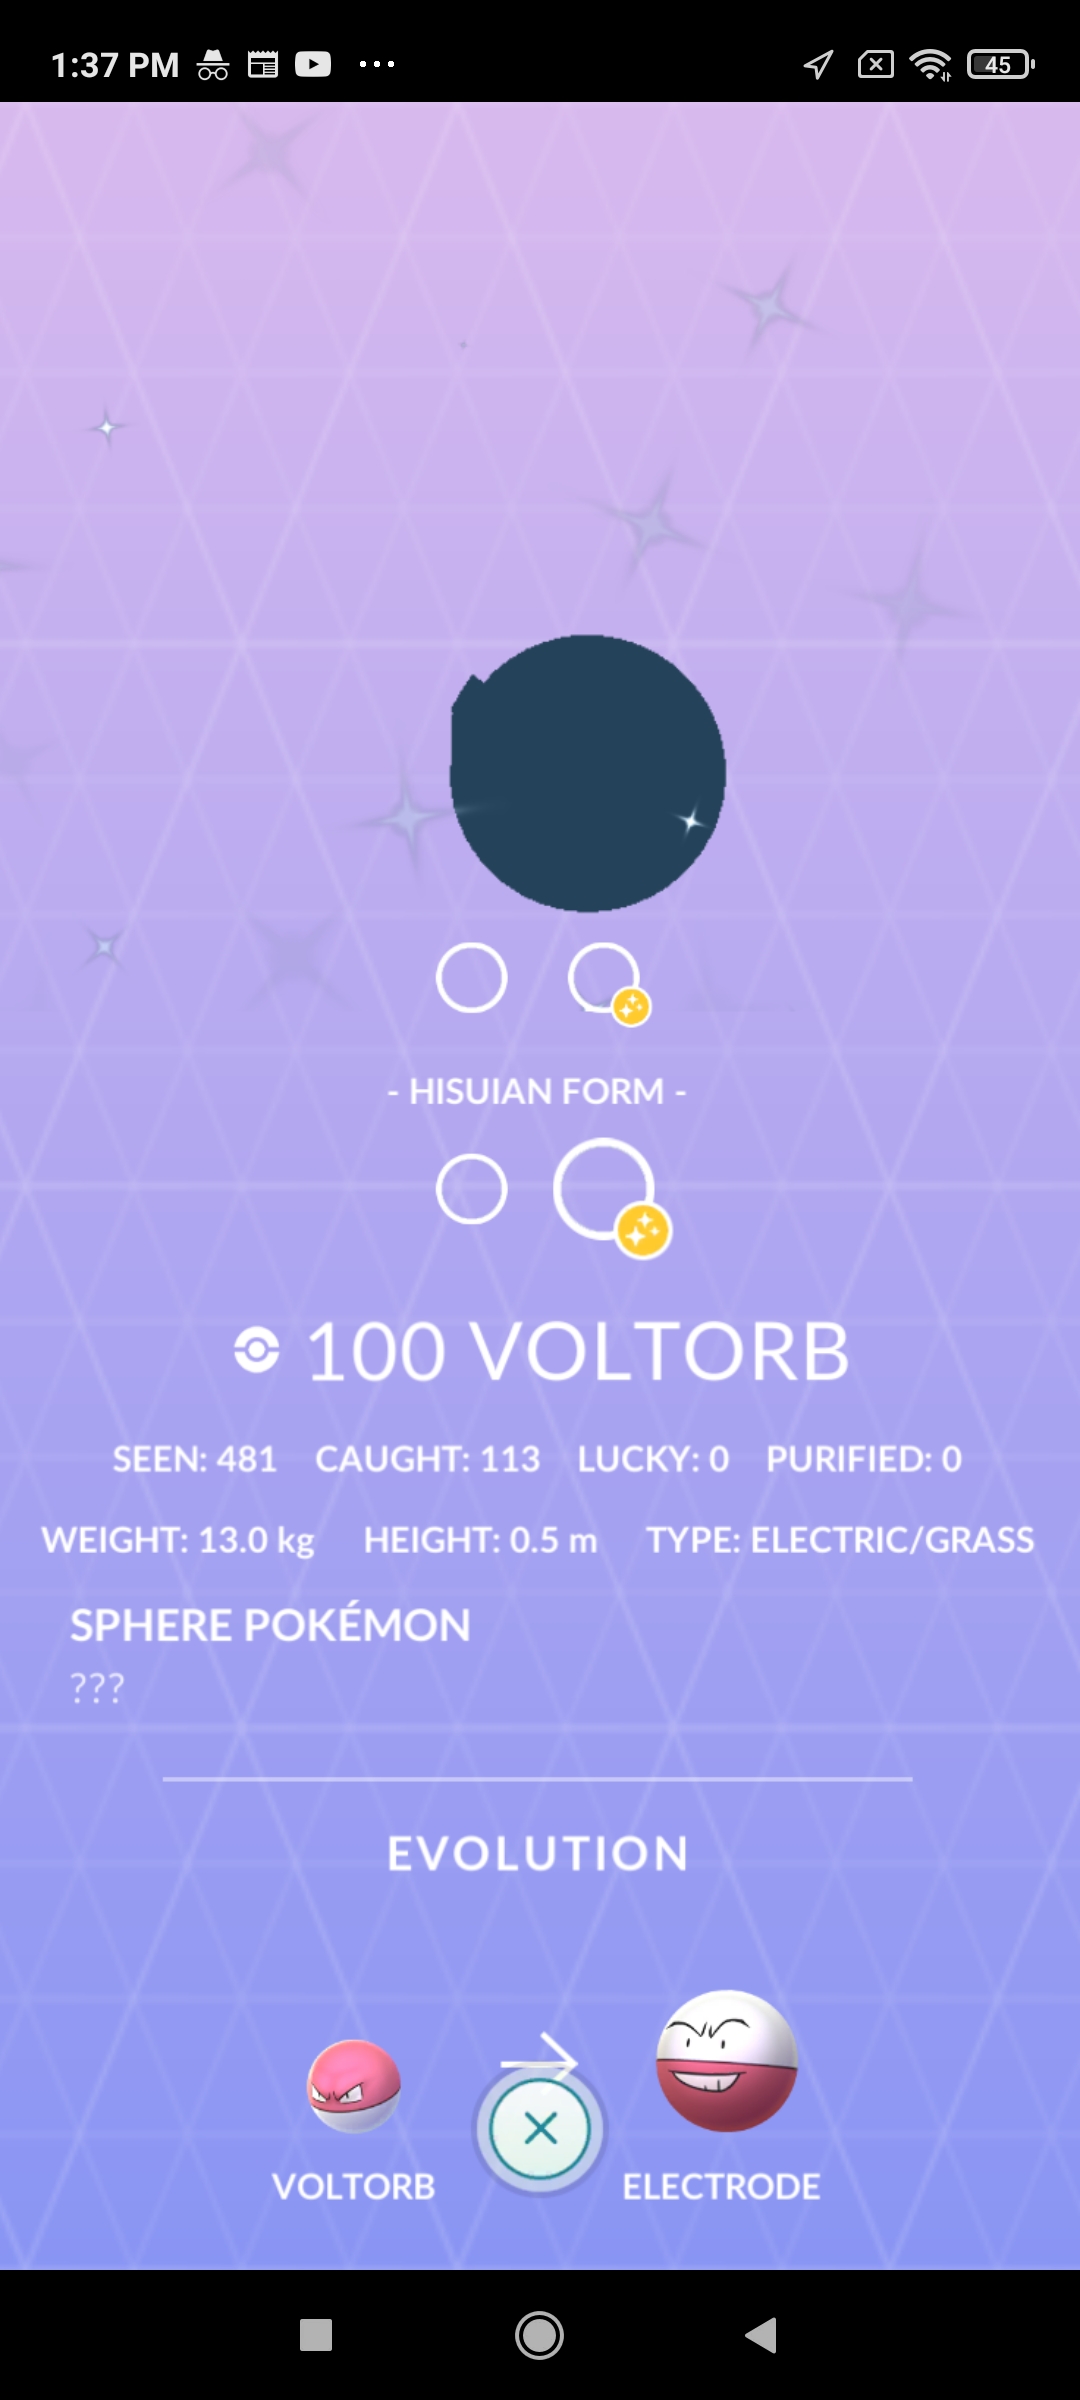 HISUIAN VOLTORB evolution into ELECTRODE in Pokemon GO !! Trainer